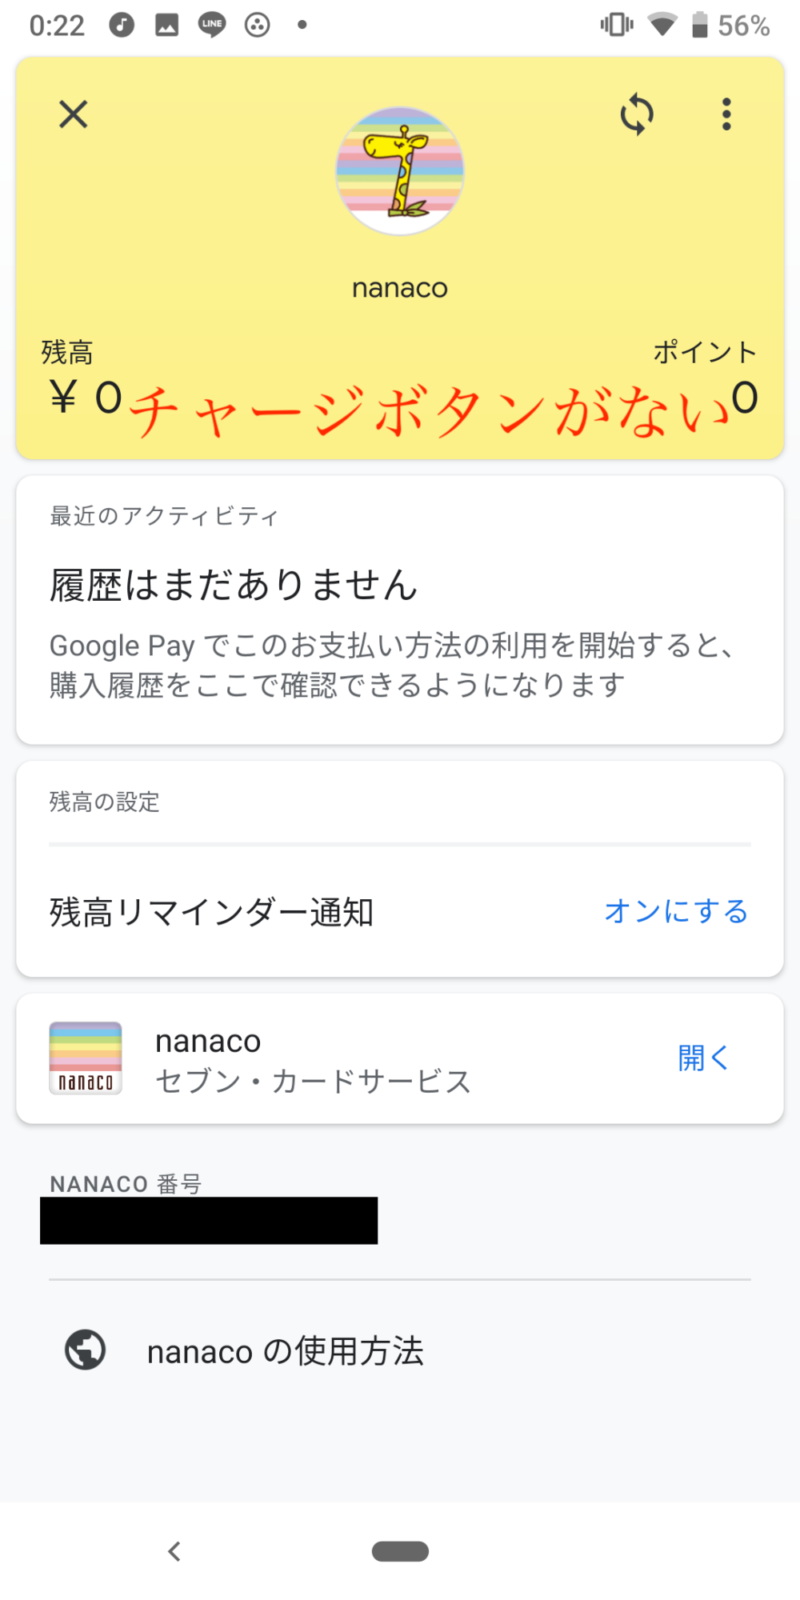 nanacoは別途アプリが必要